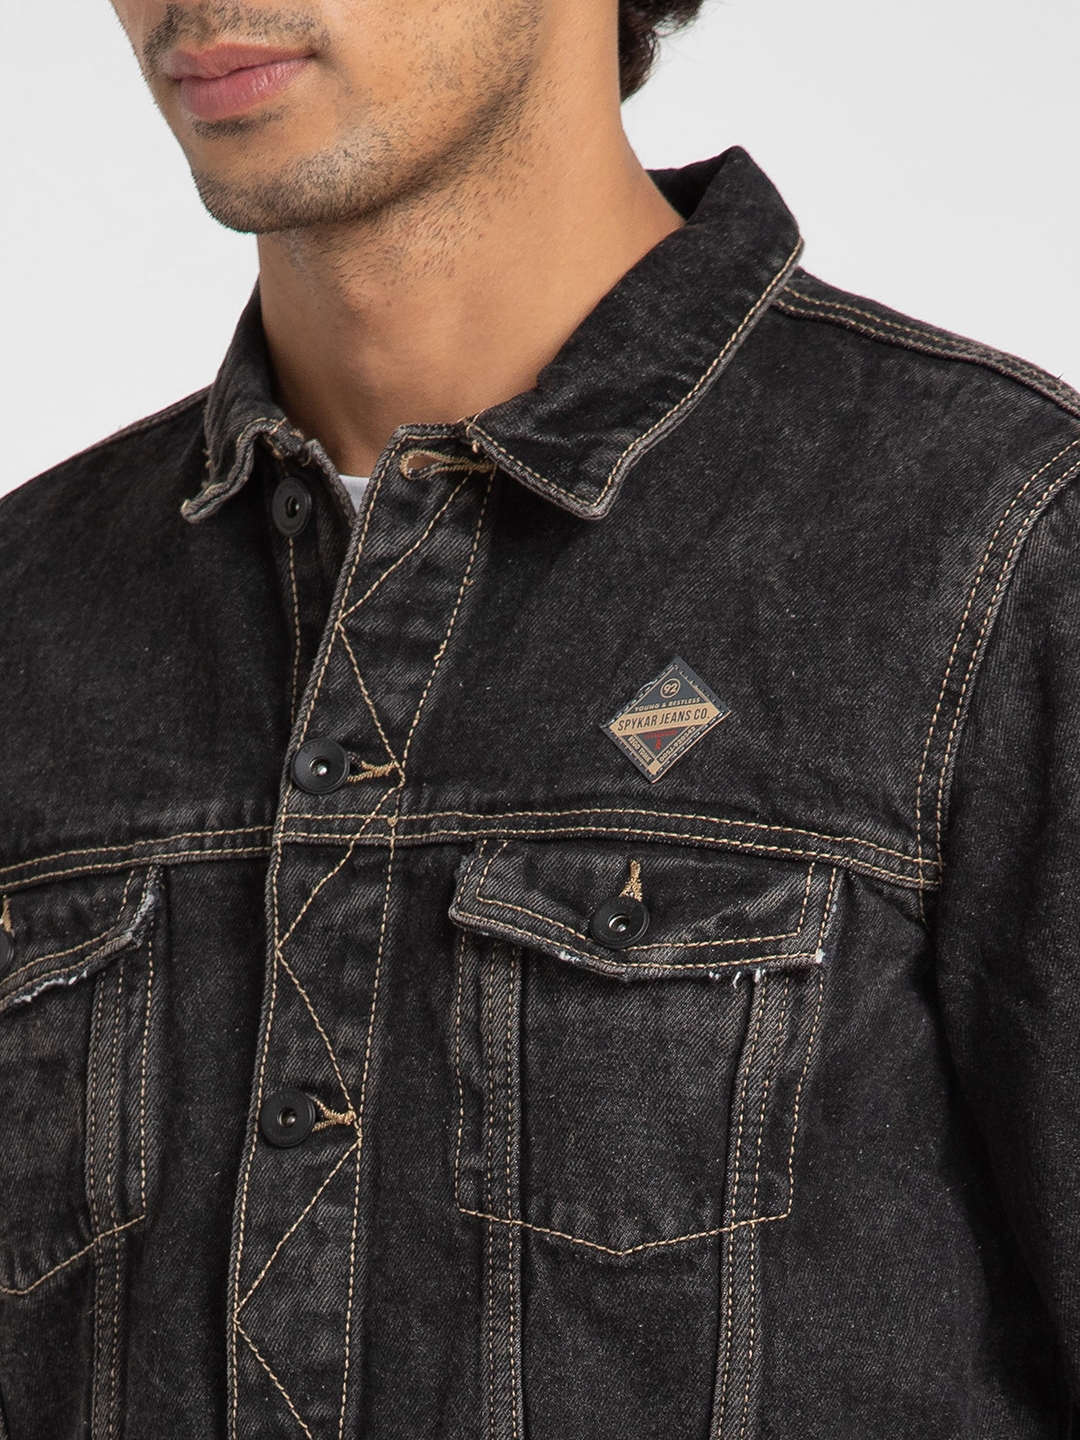 Men's Black Denim Slim Fit Casual Biker Jacket Leather Sleeves Outdoor  Jacket S1 | eBay